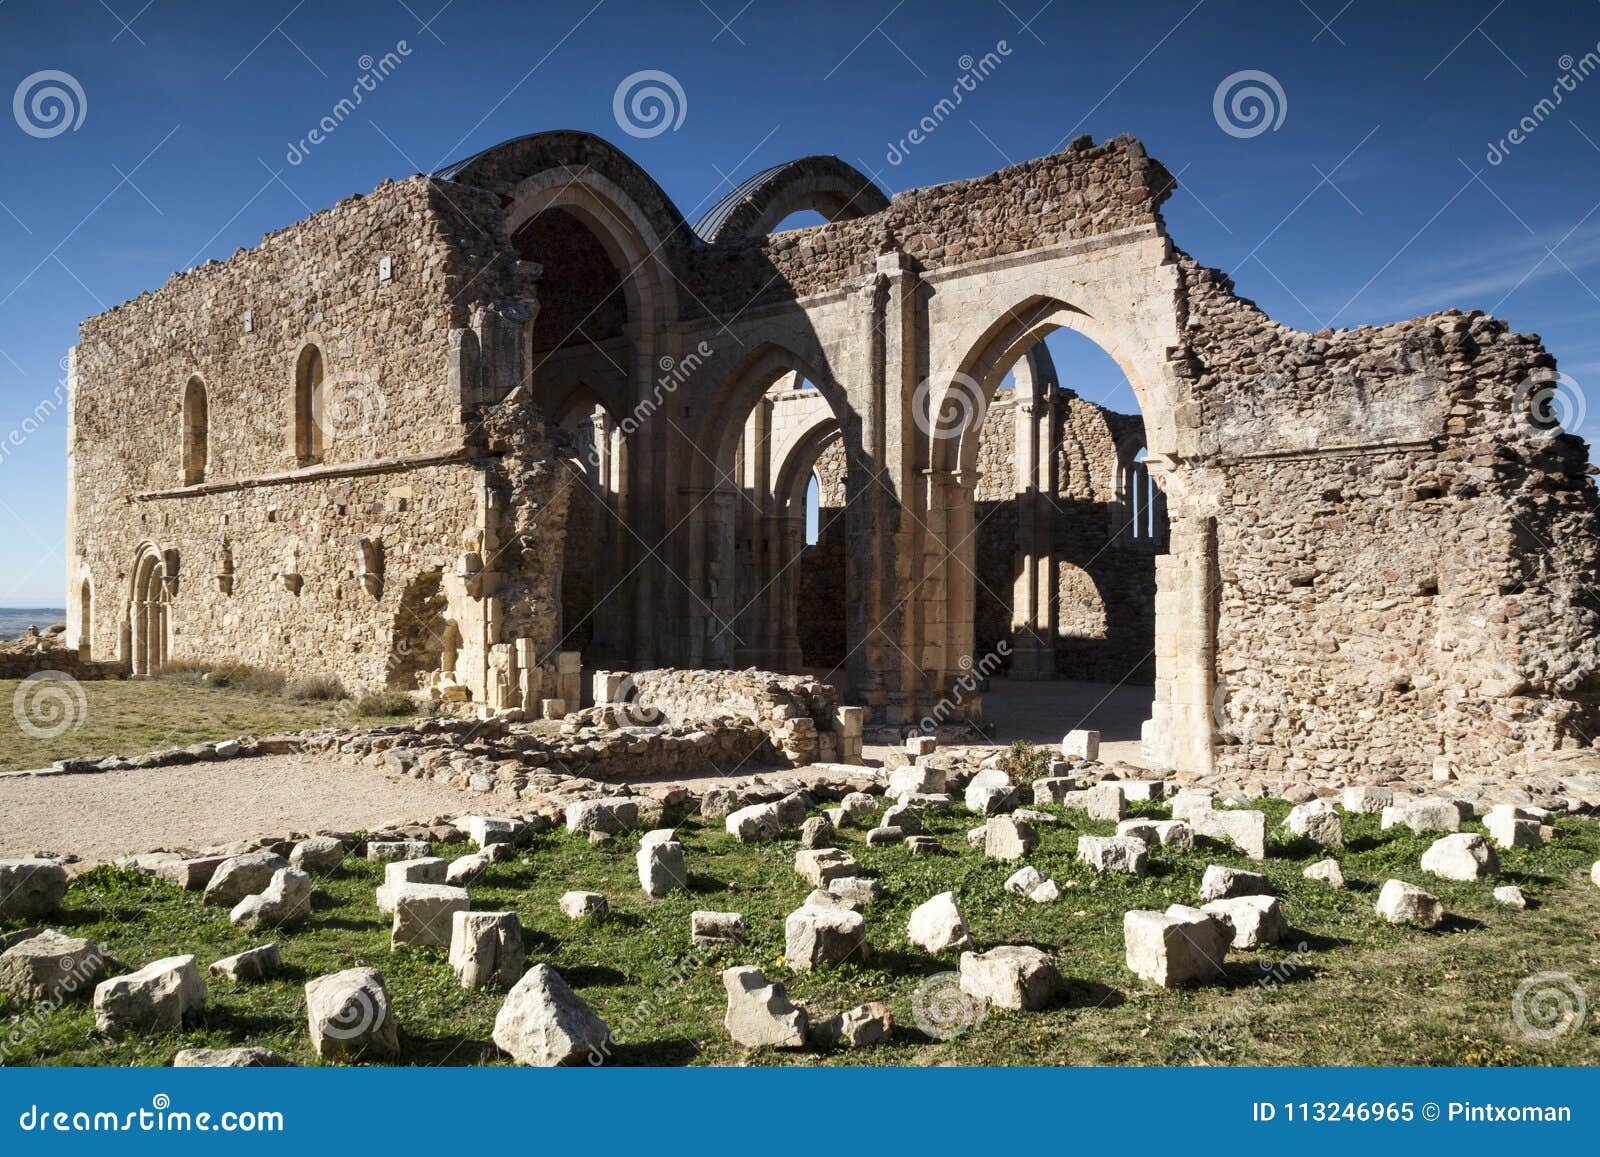 cistercian monastery in ruins. collado hermoso, segovia. spain